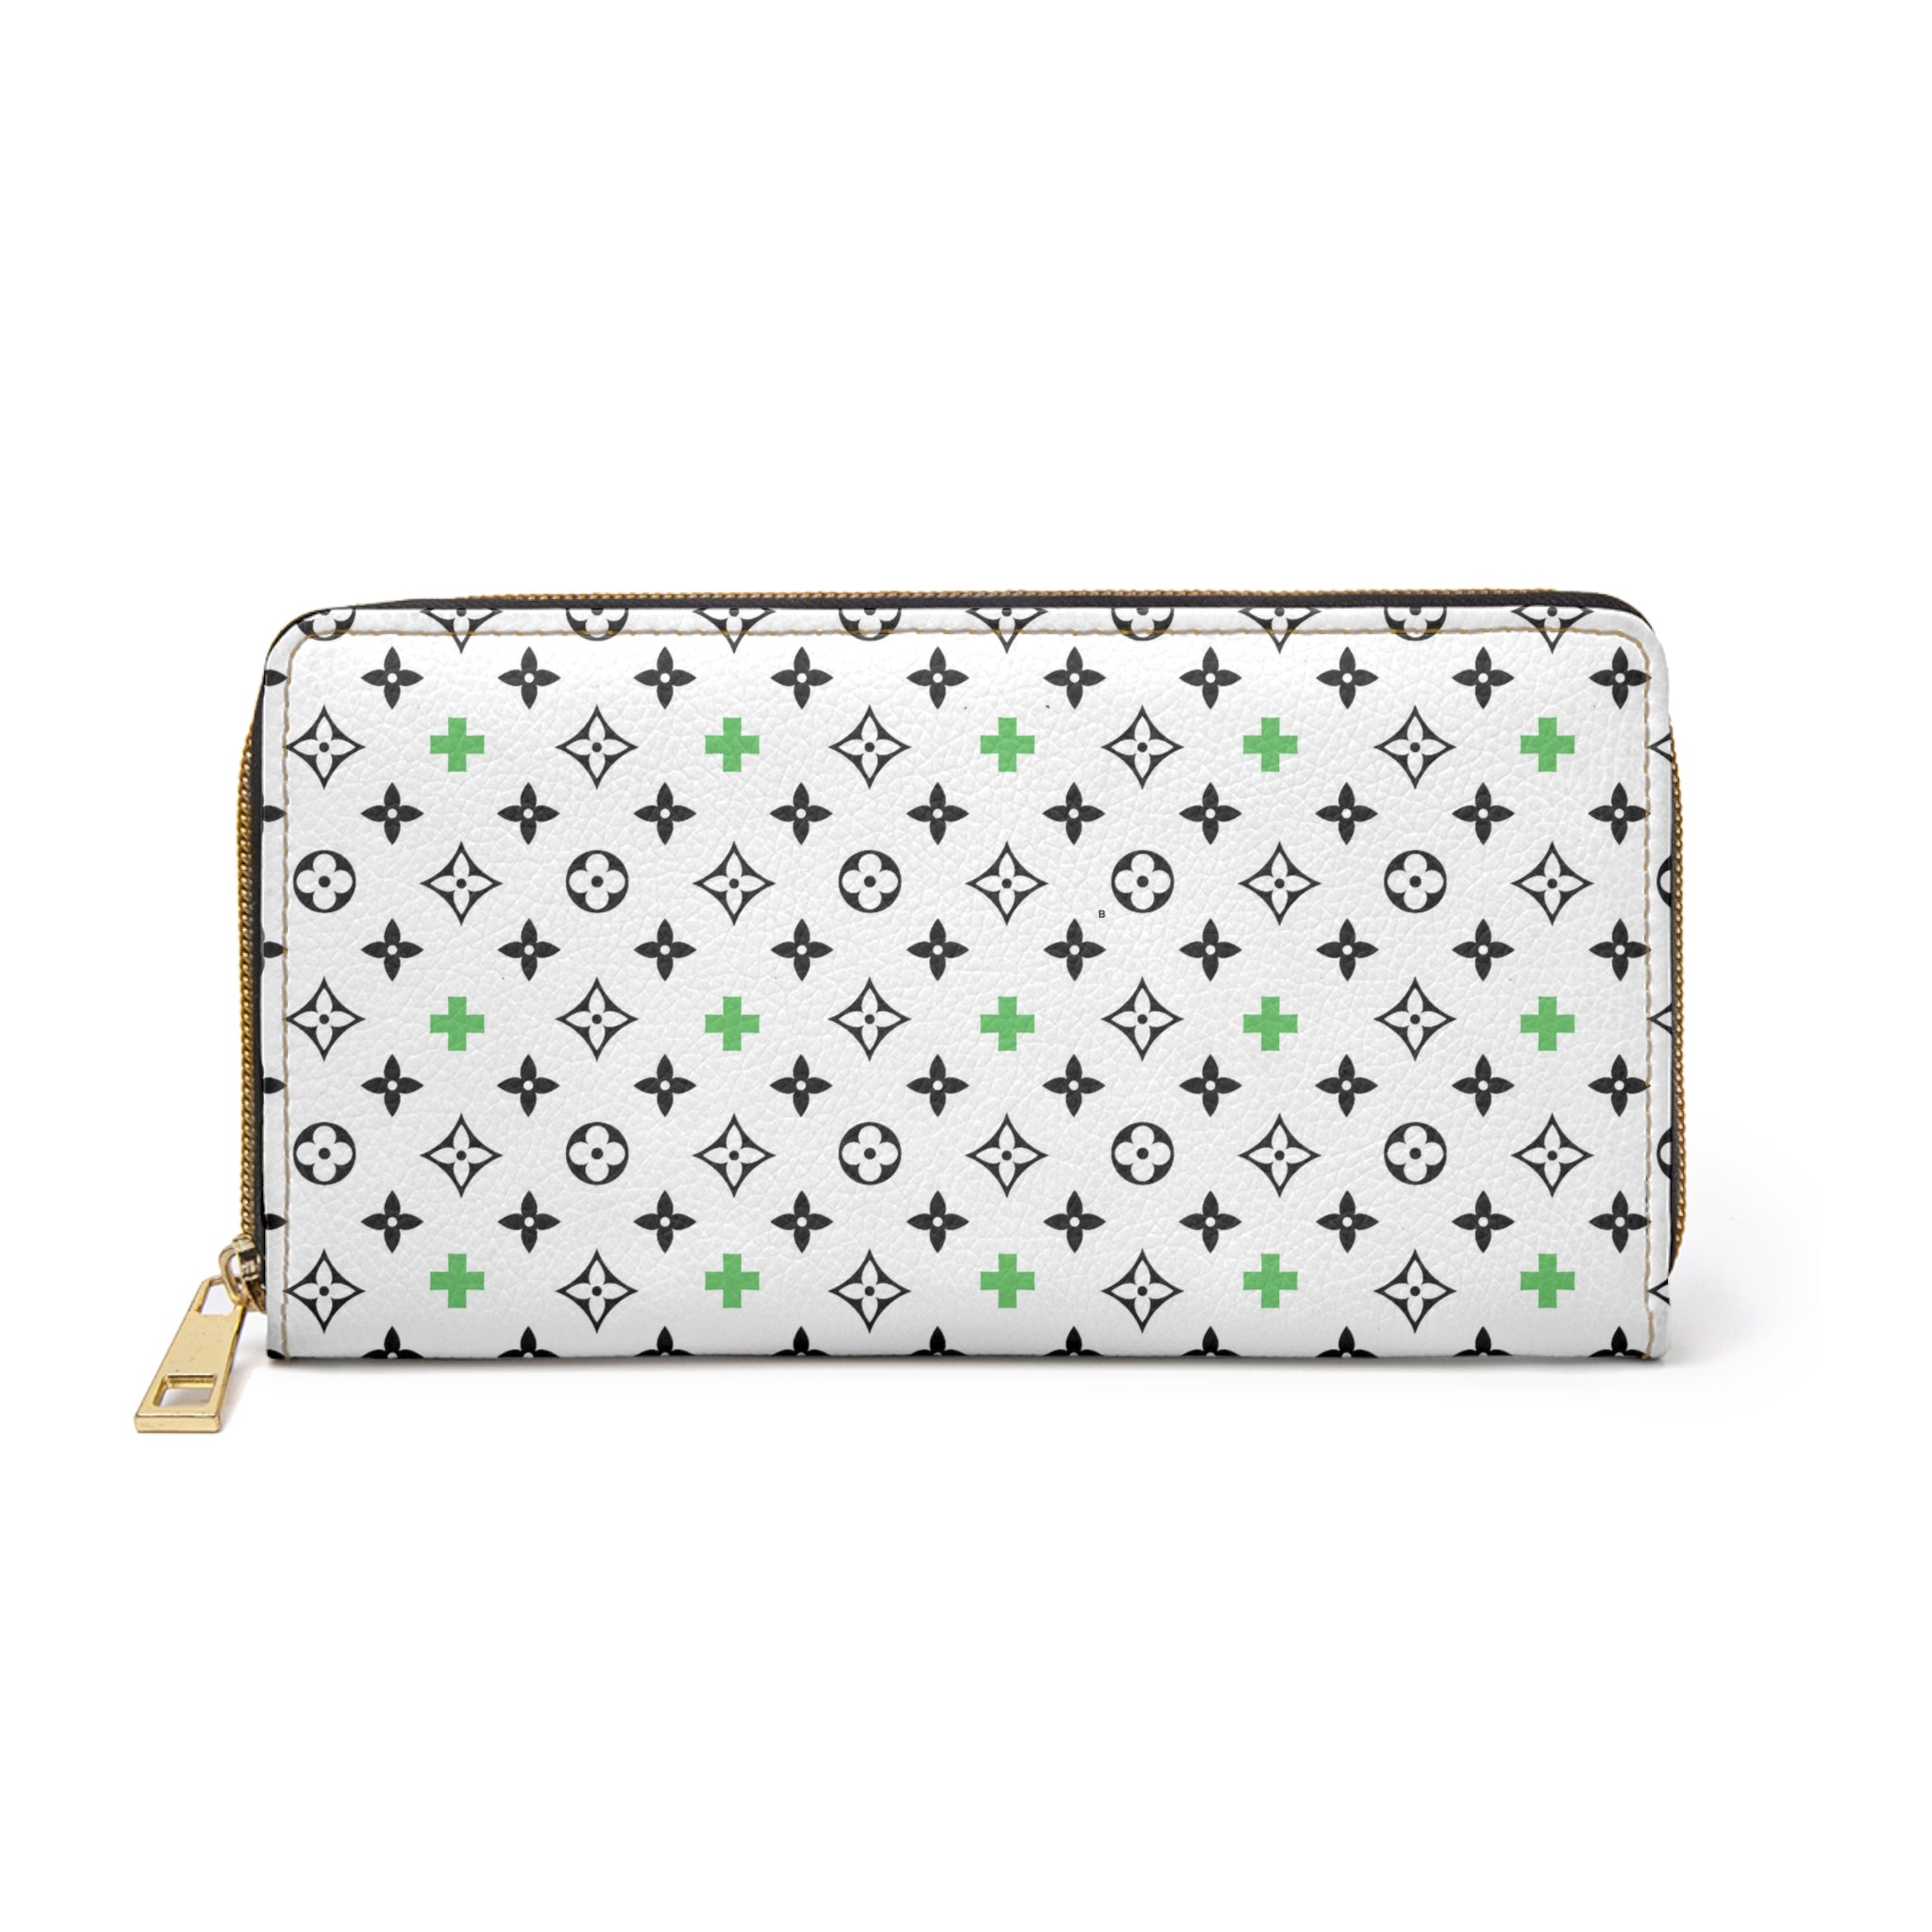  B+A Design in Green Women's Wallet, Zipper Pouch, Coin Purse, Zippered Wallet, Cute Purse AccessoriesOnesizeWhite